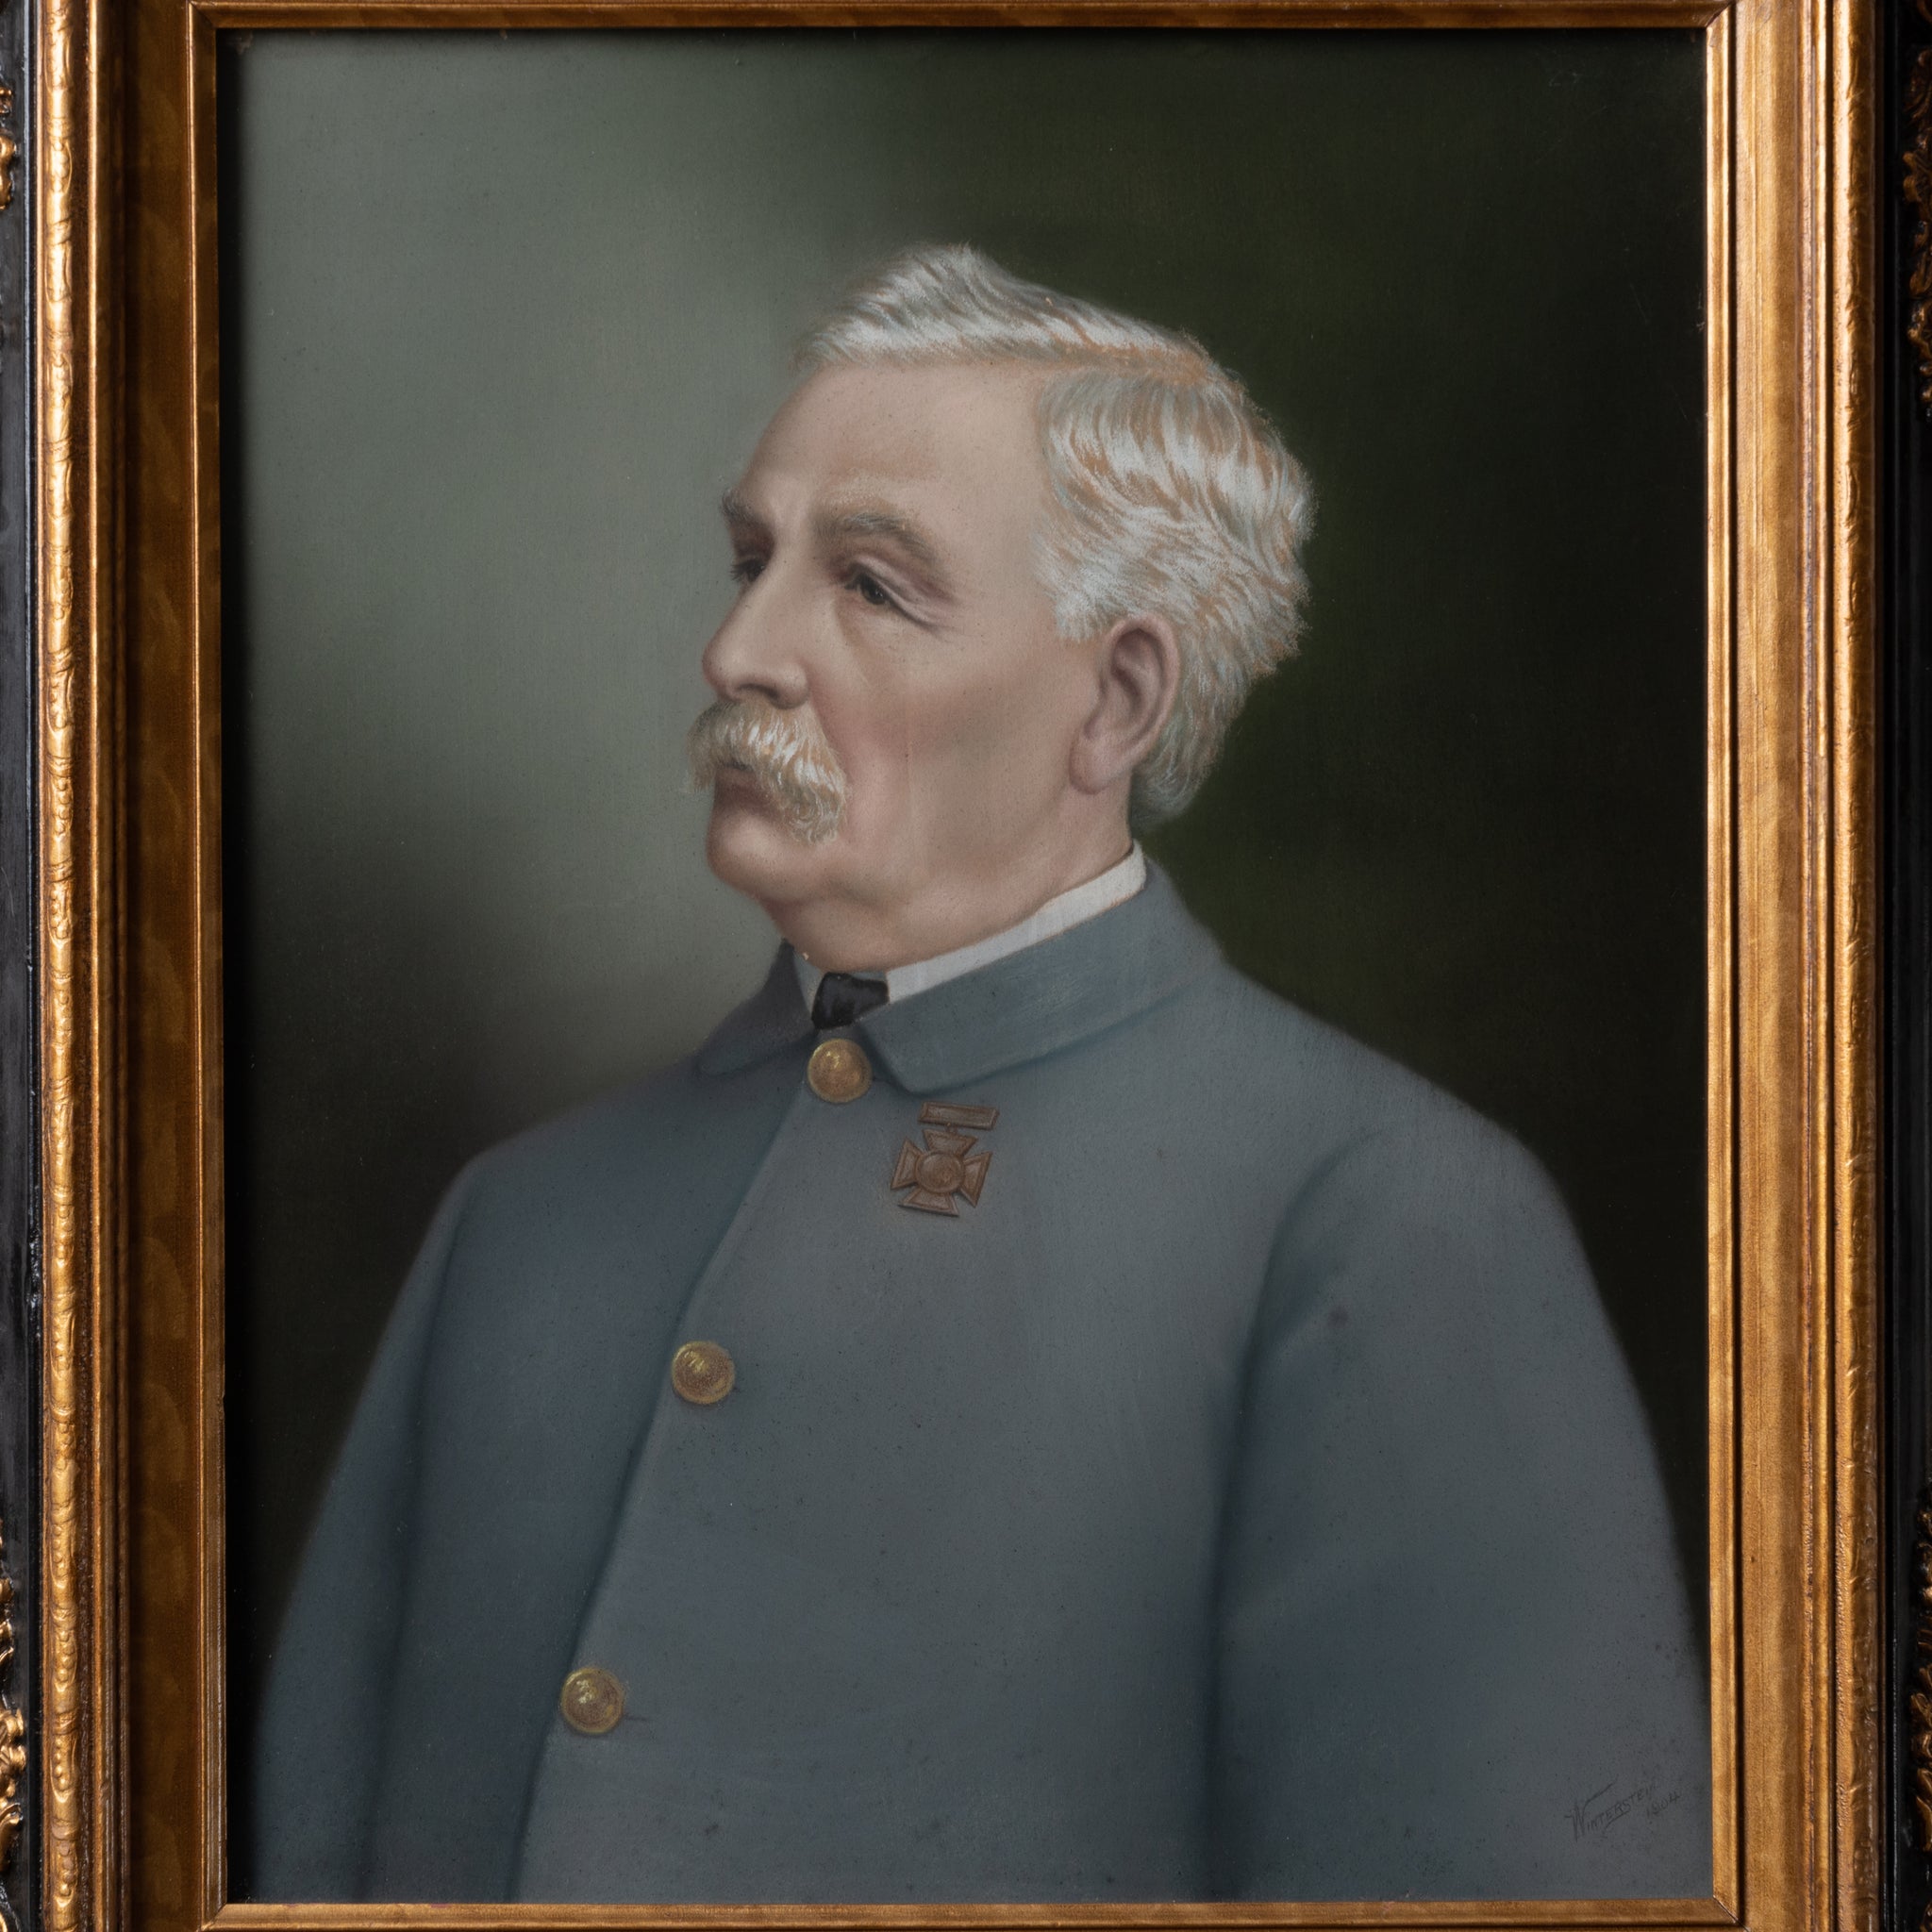 Confederate Captain Portrait by Winterstein, 1904